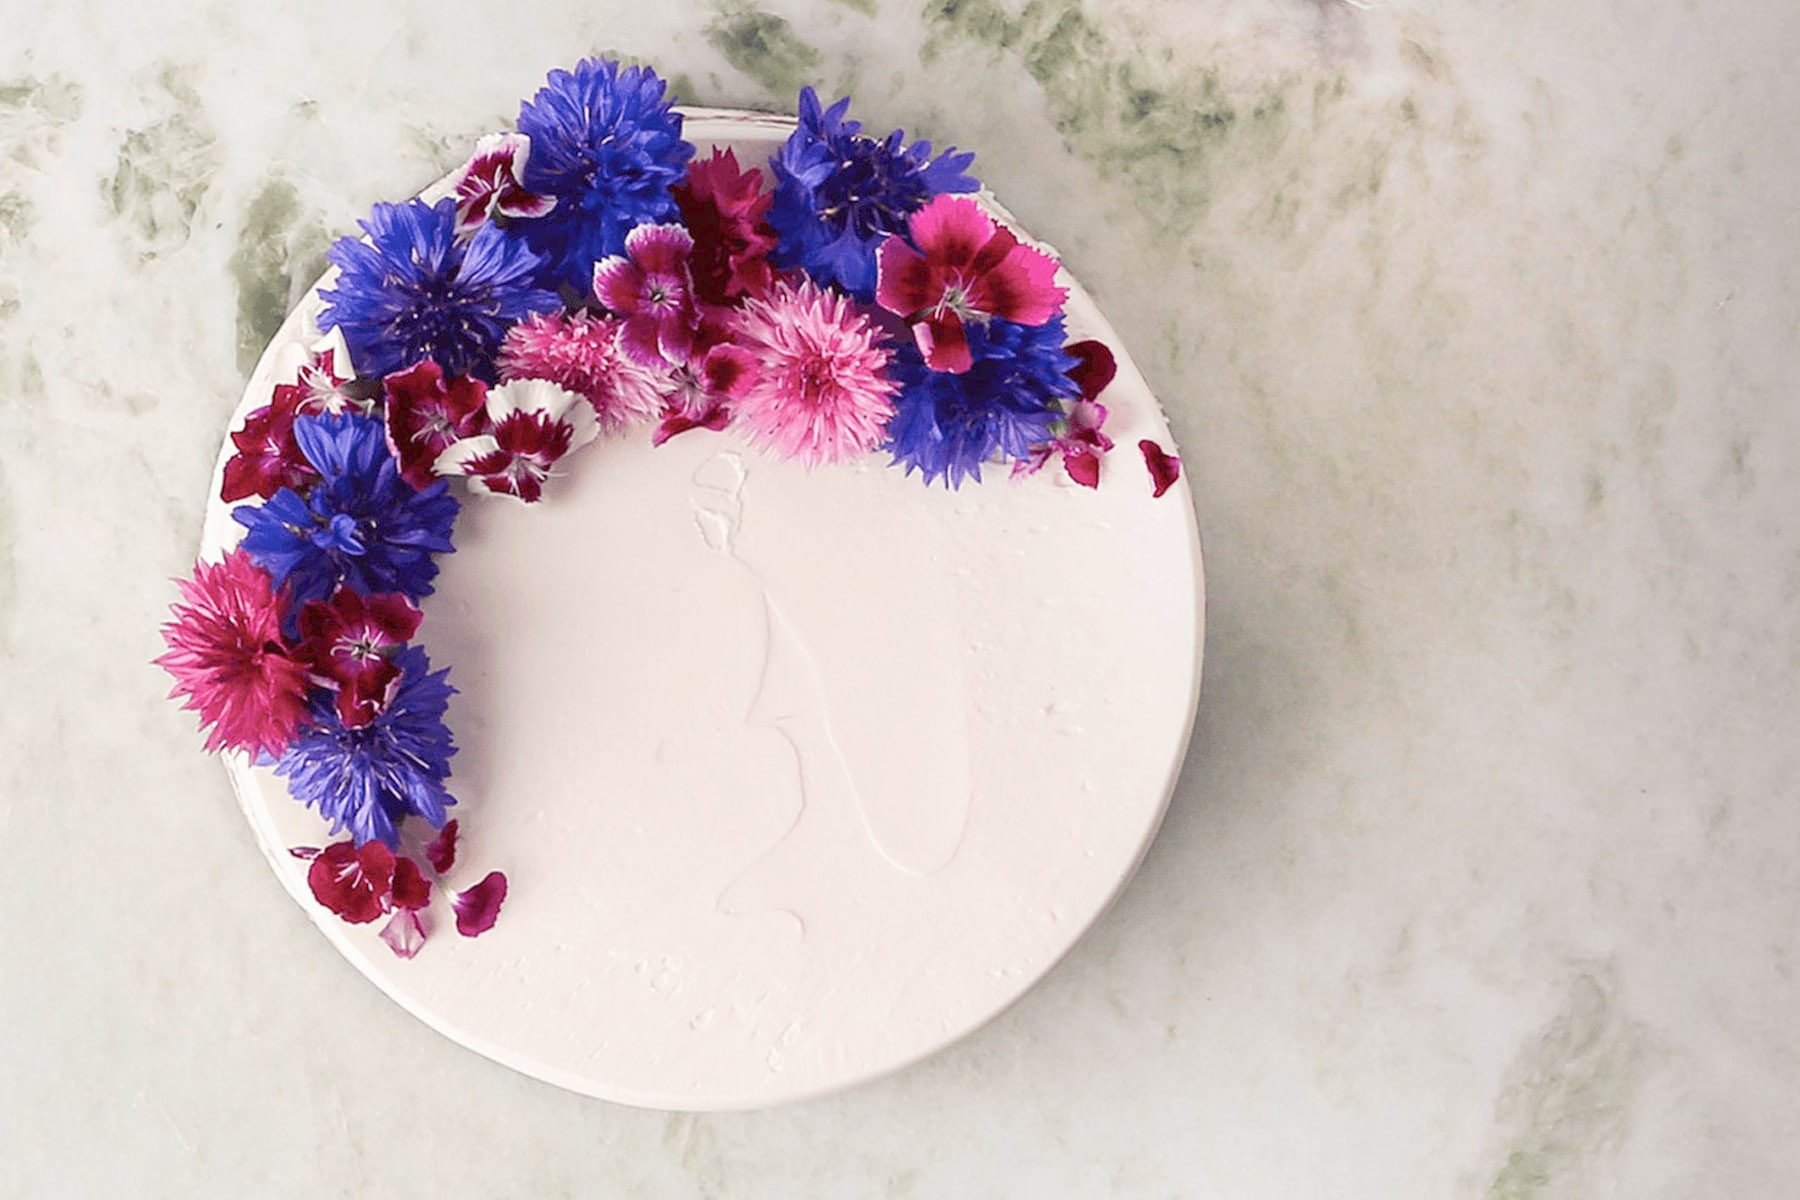 Edible flower cake - Paperless Post 